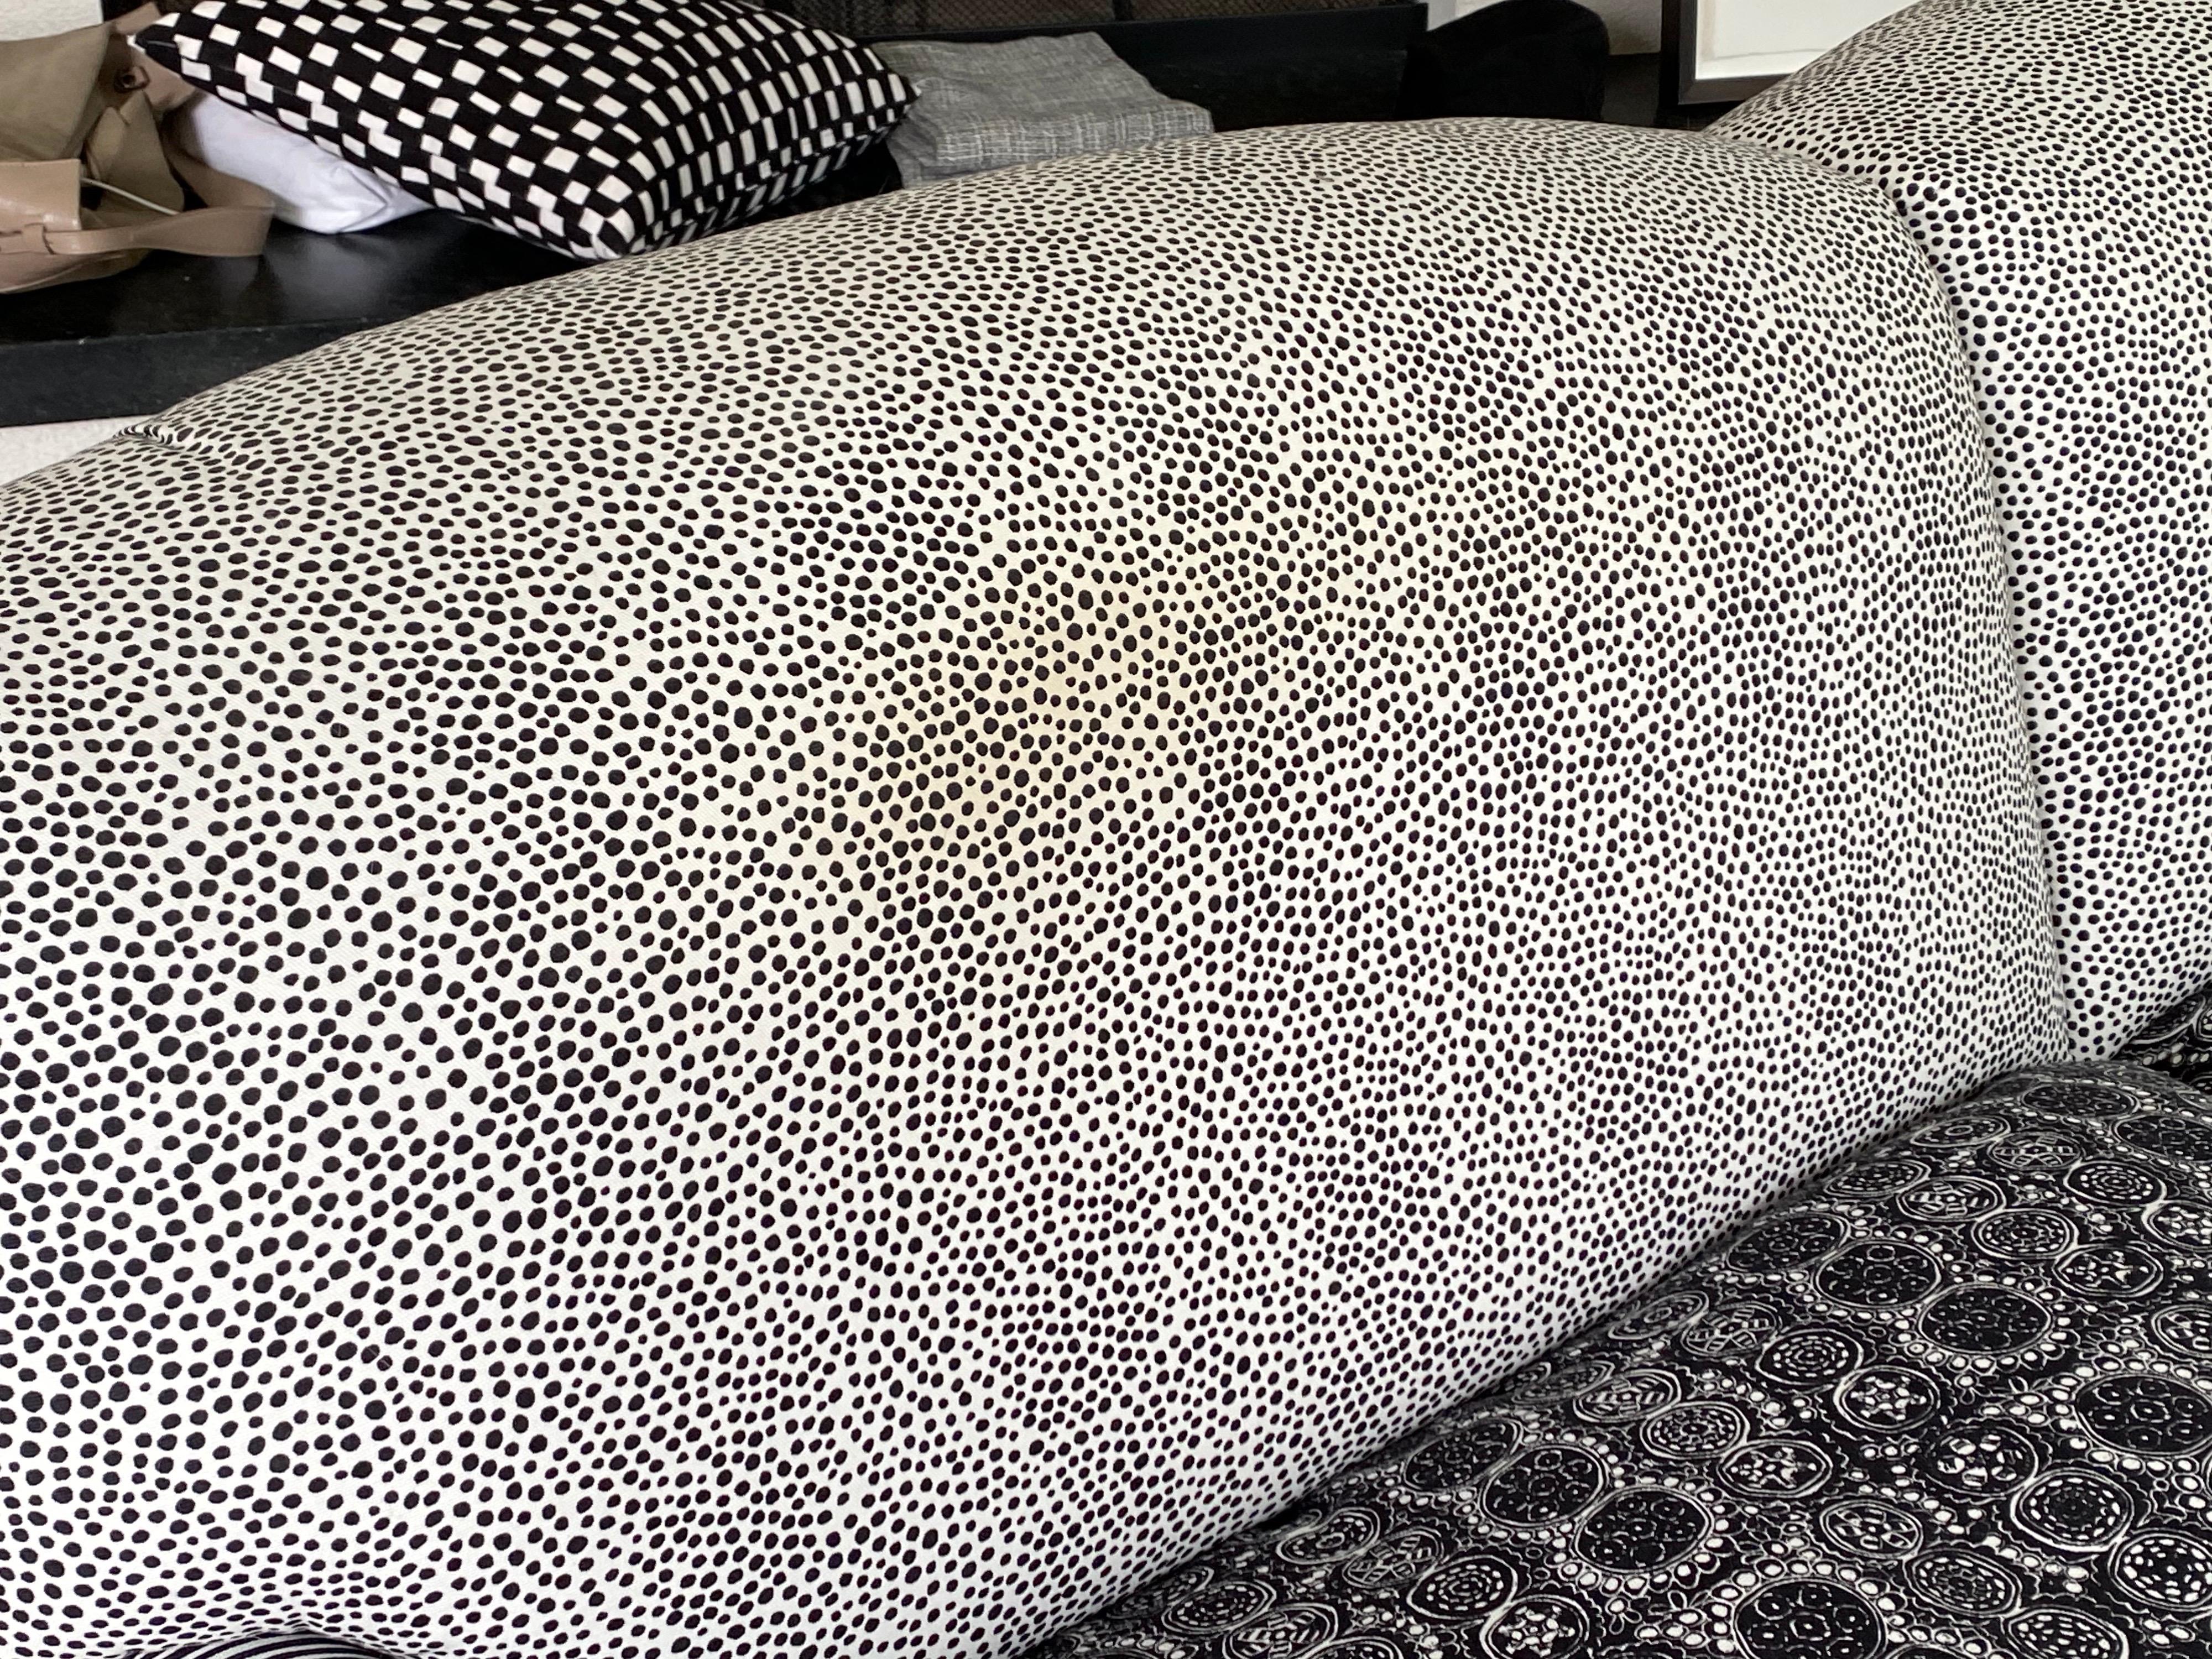 British George Sherlock Extended Two Seater Sofa covered in Marimekko Fabrics